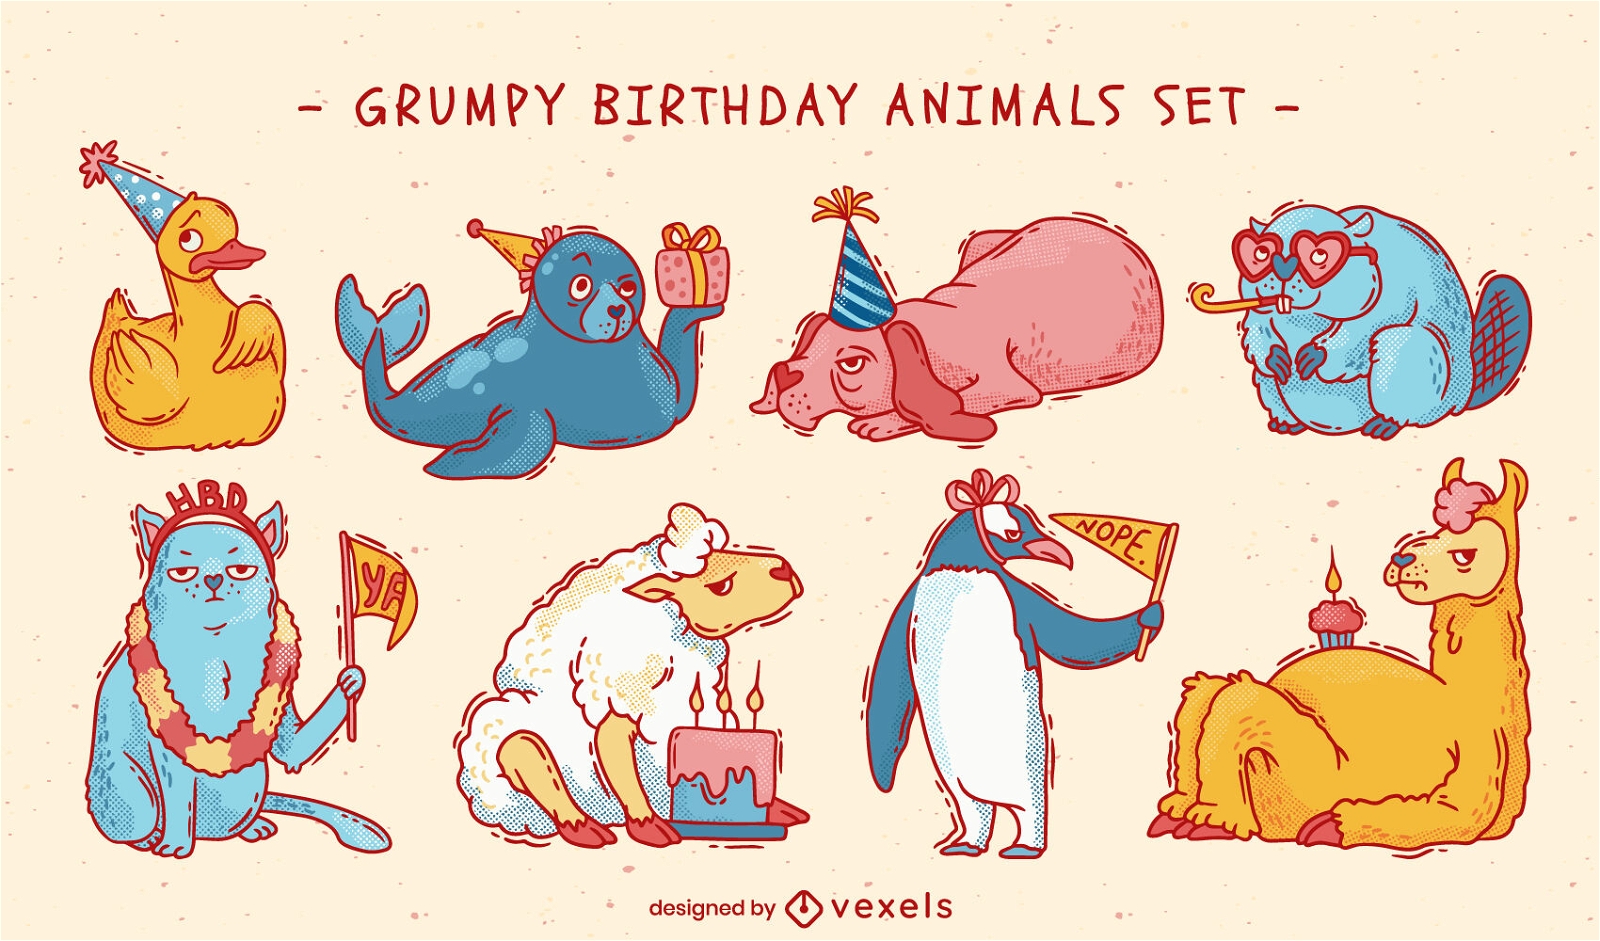 Grumpy animals birthday set